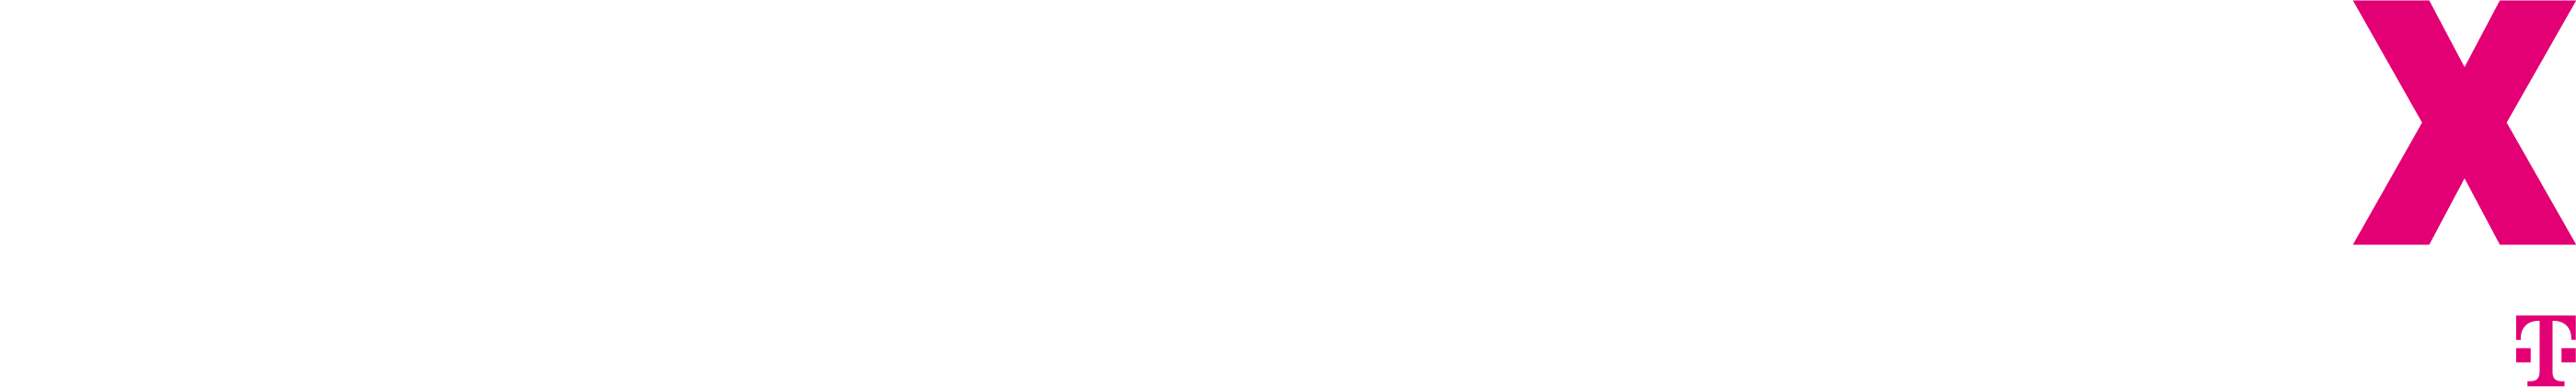 Microsoft Teams X powered by Telekom Logo